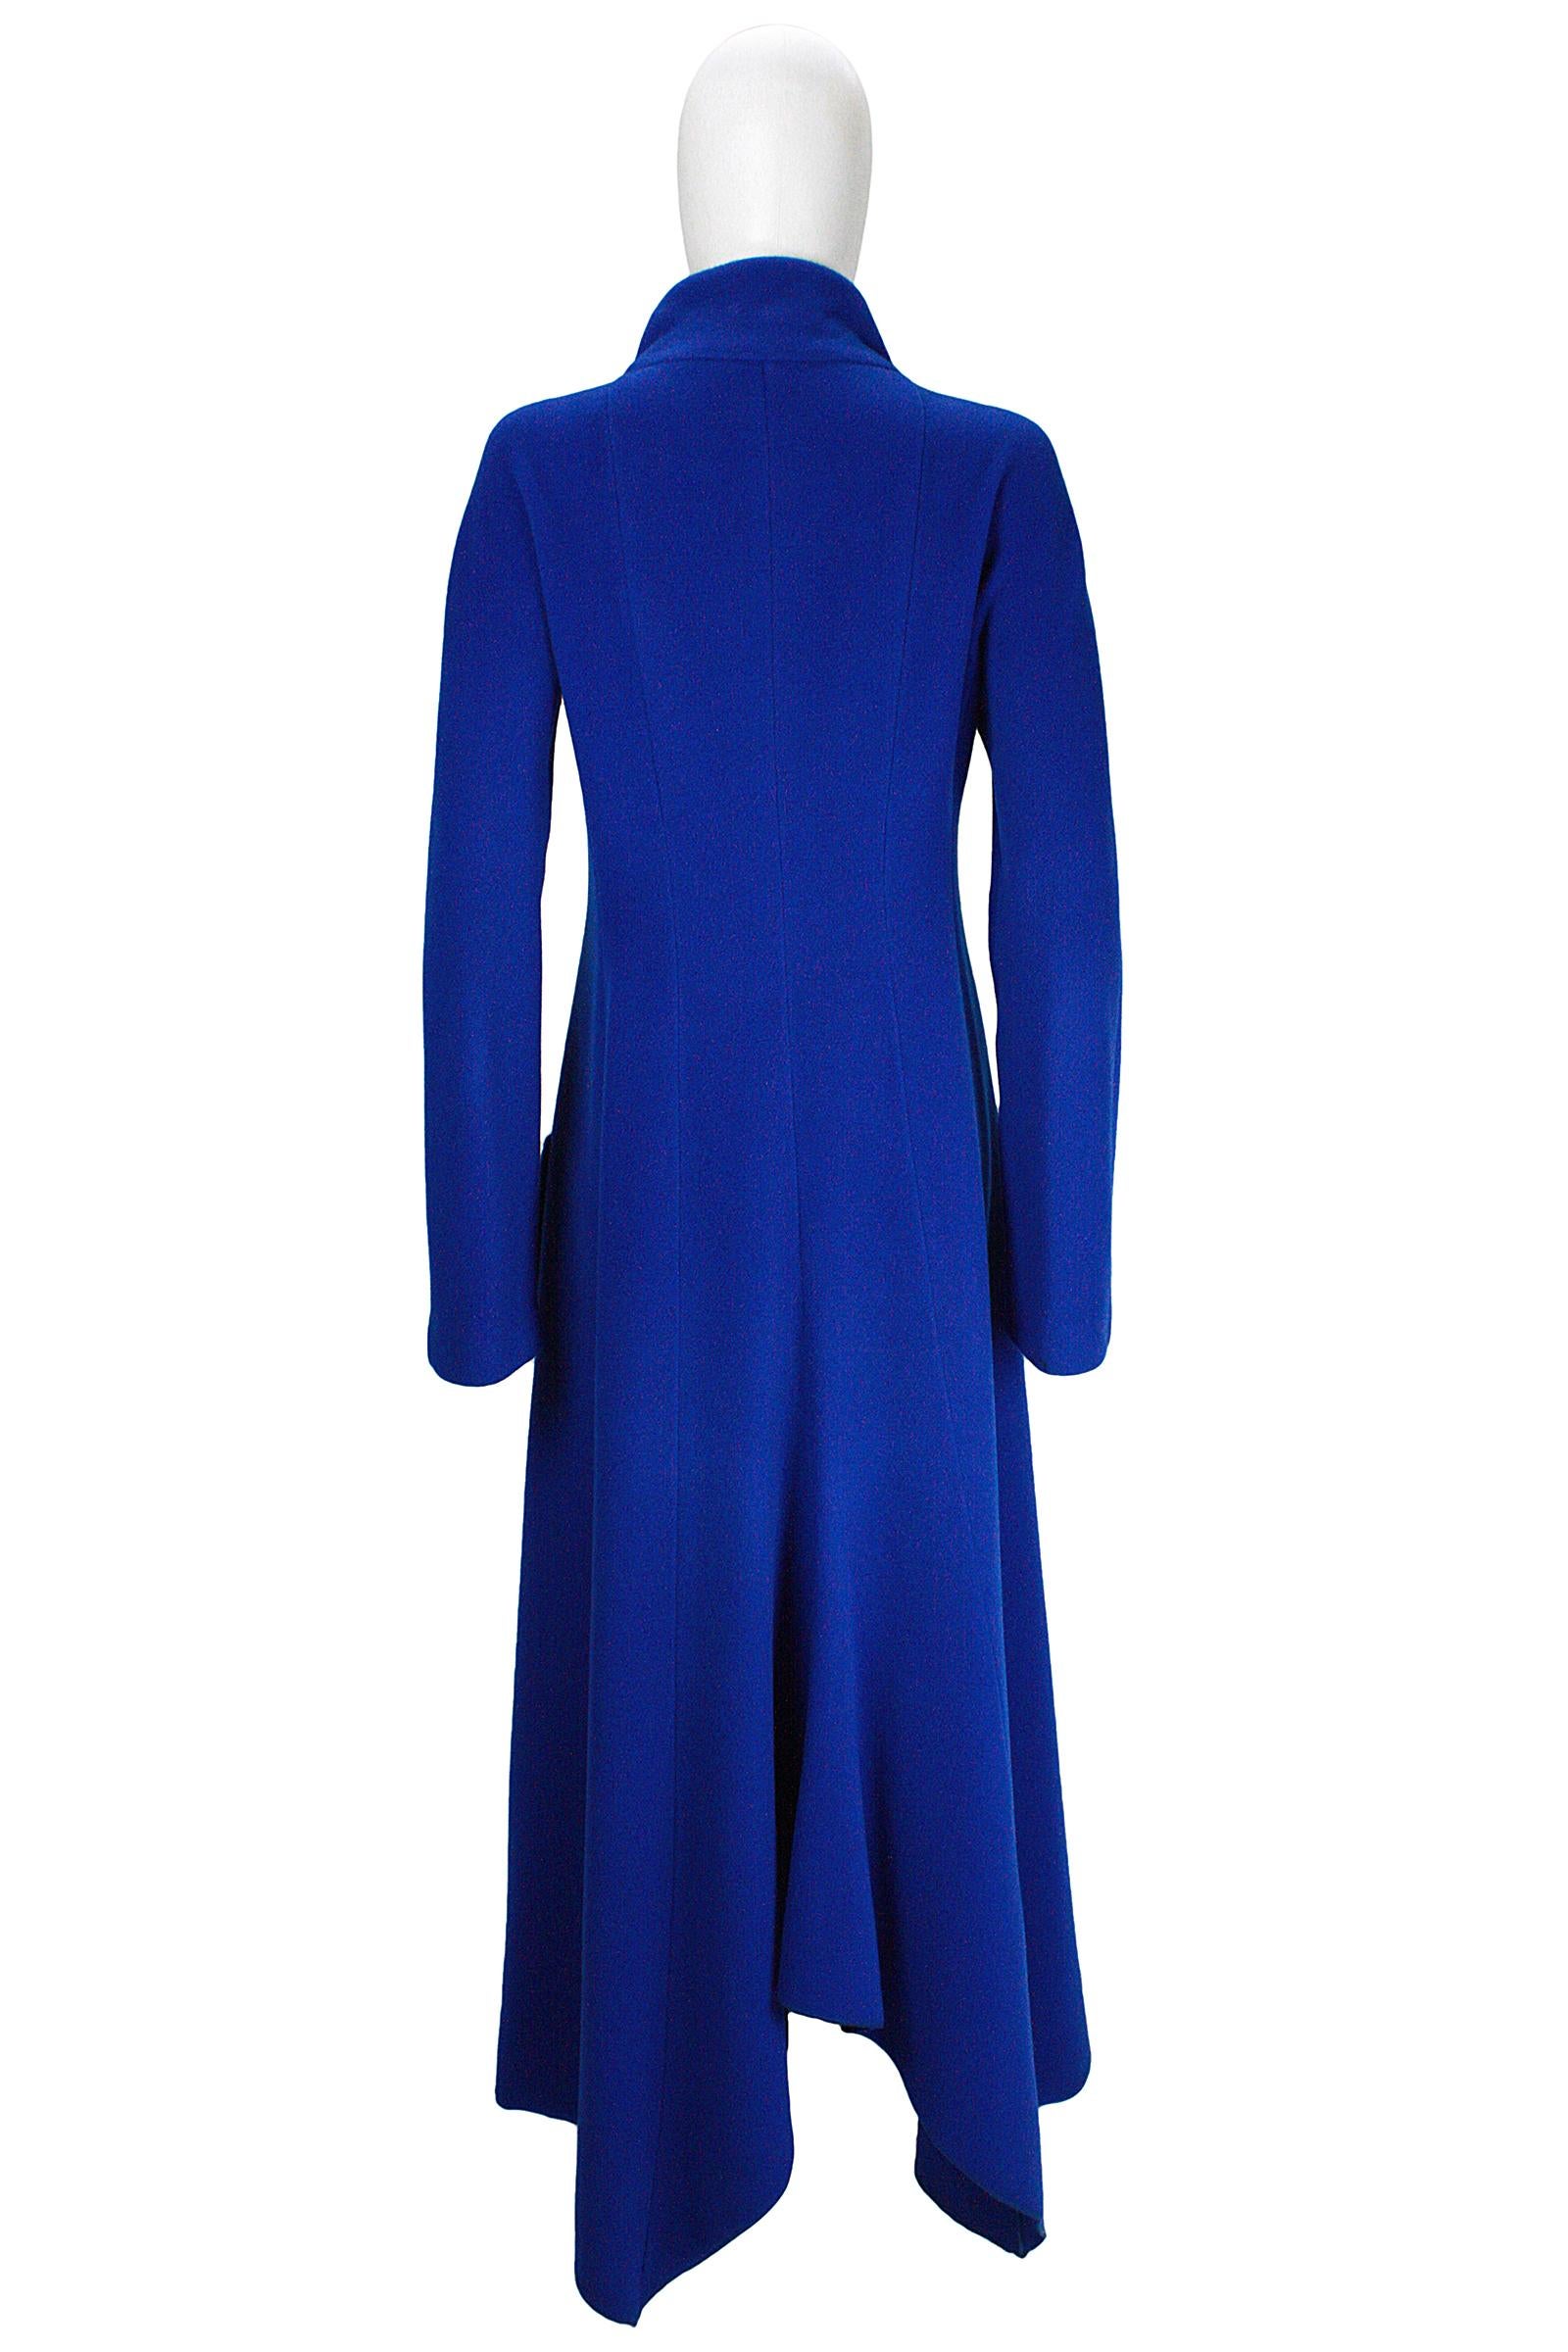 1980s Krizia Blue Wool Double Zip Coat For Sale 2